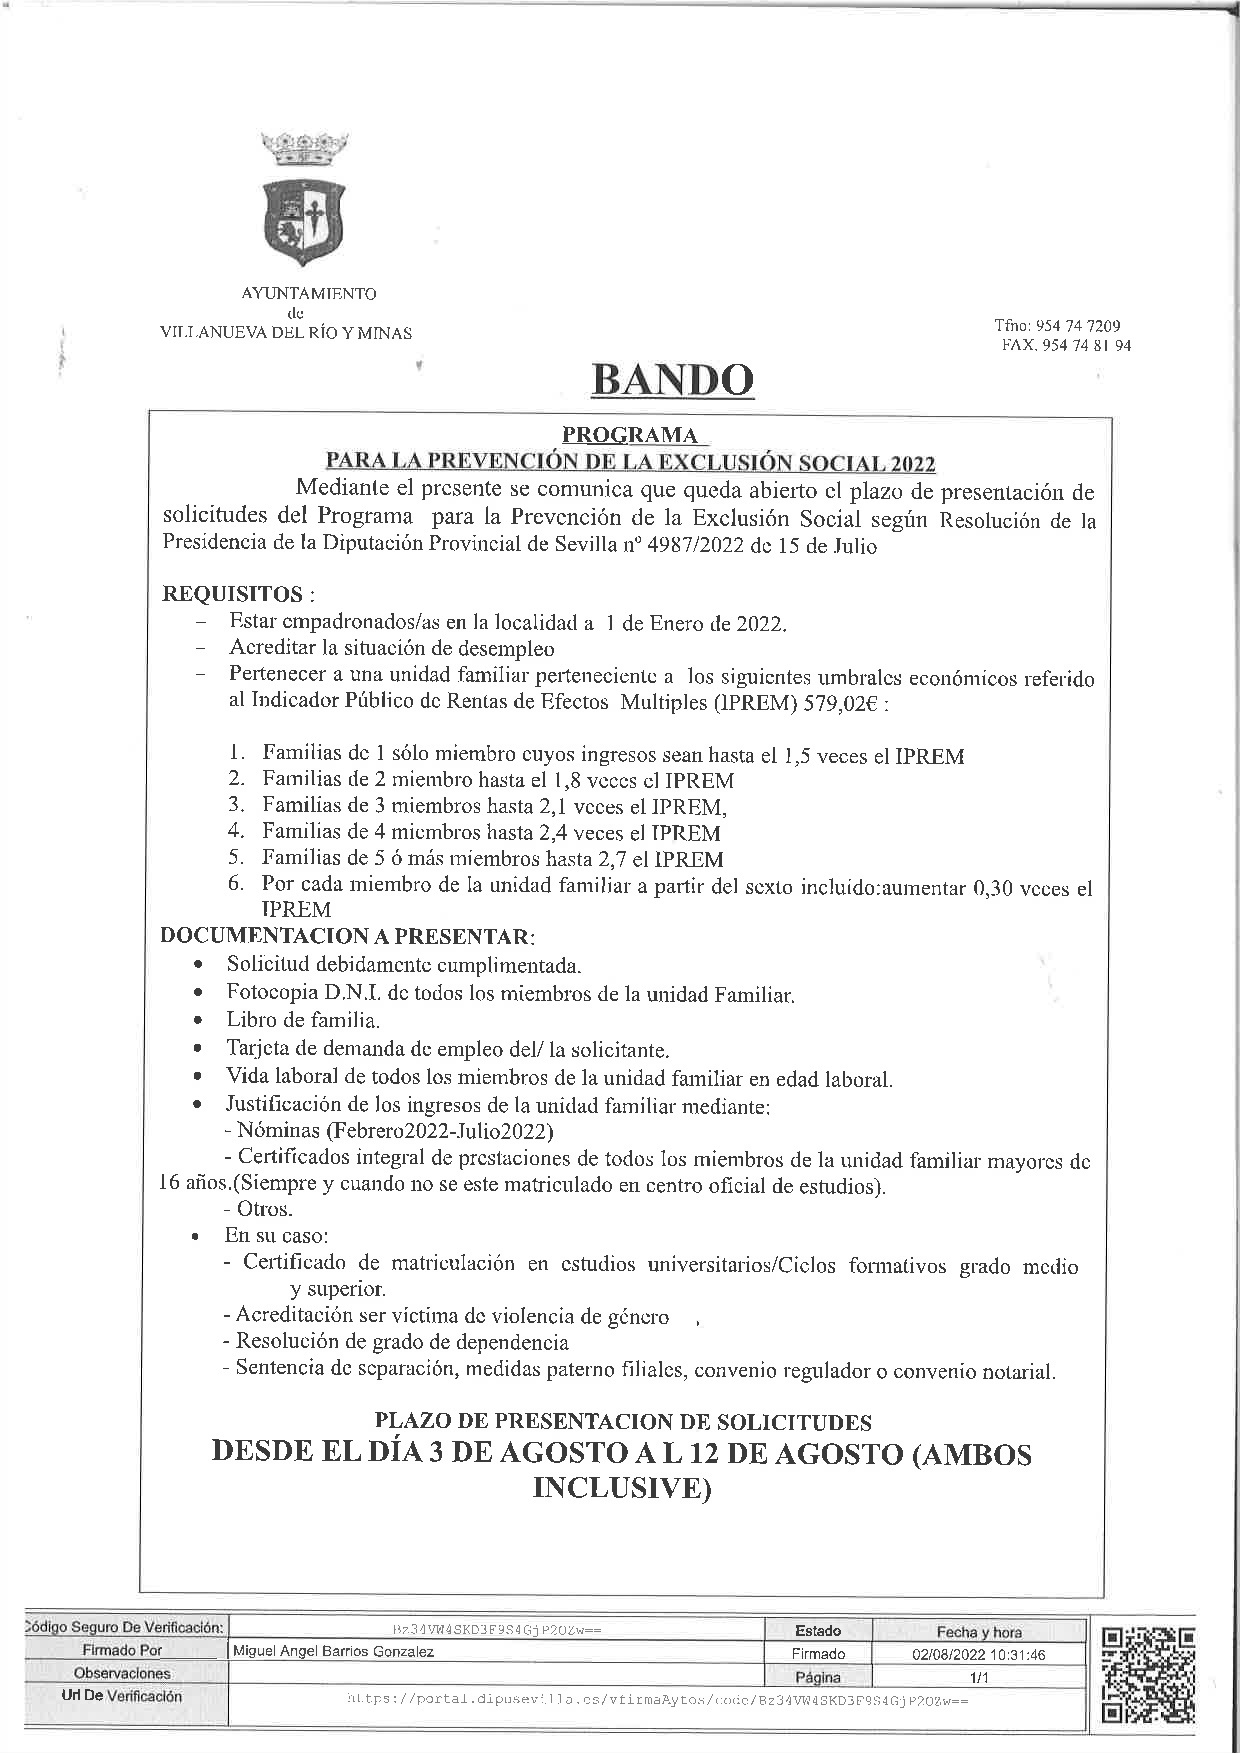 BANDO PROGRAMA EXCLUSION SOCIAL